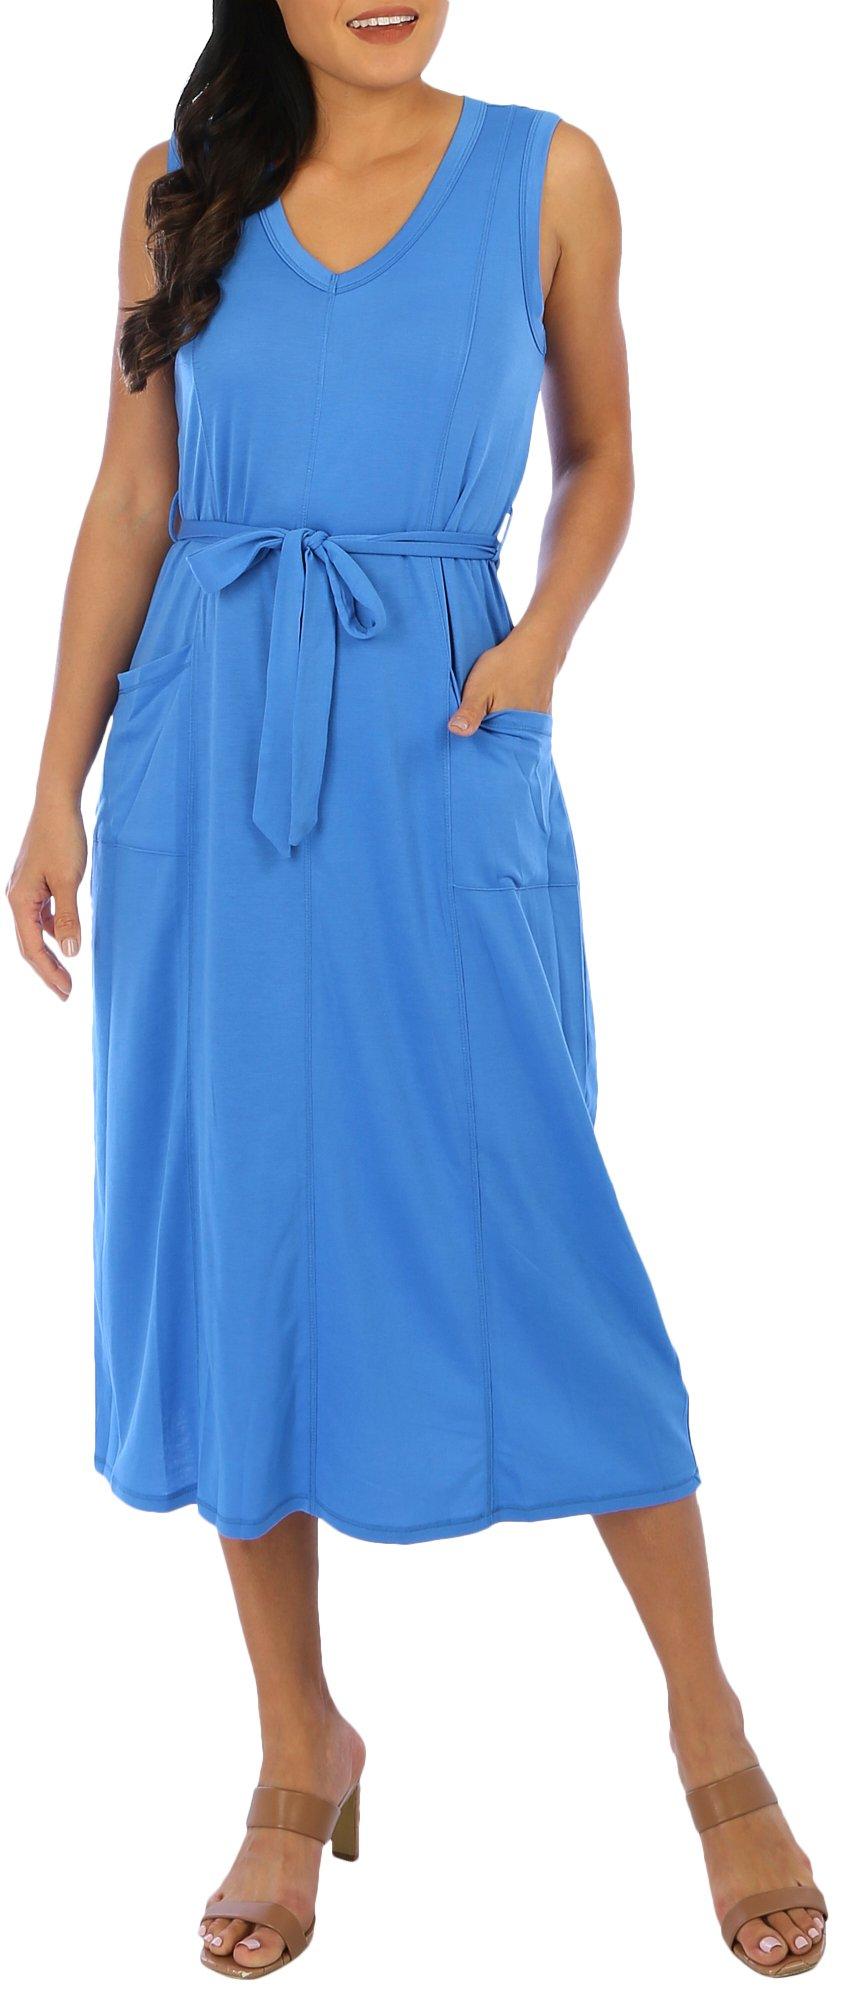 Bobeau Womens Seam Detailed Sleeveless Dress